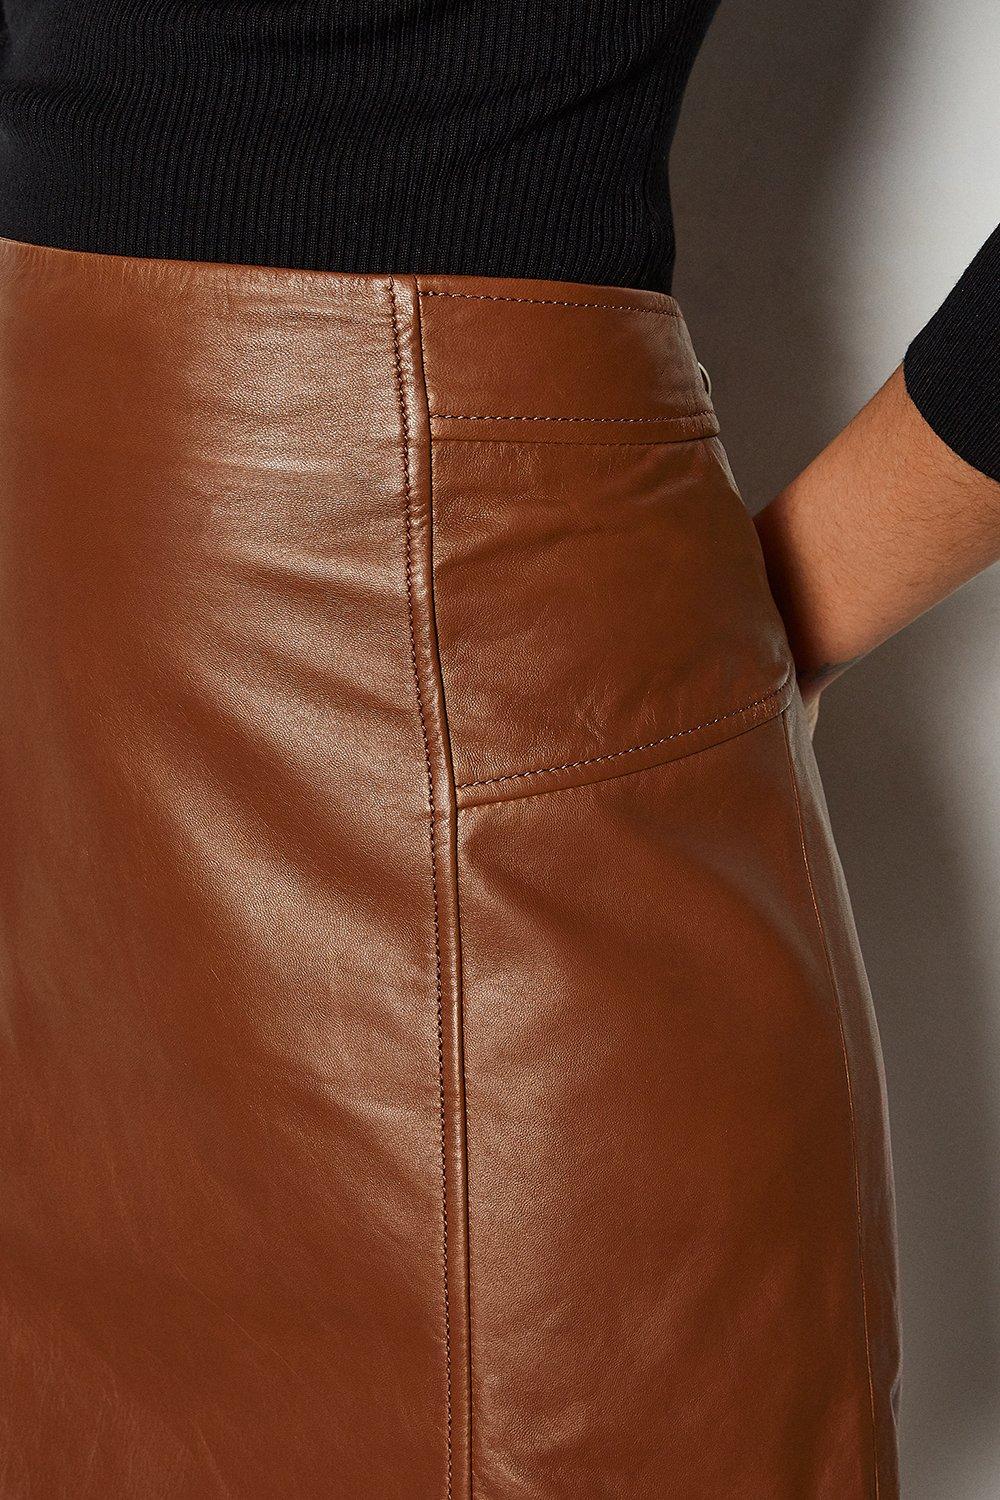 karen millen leather mini skirt